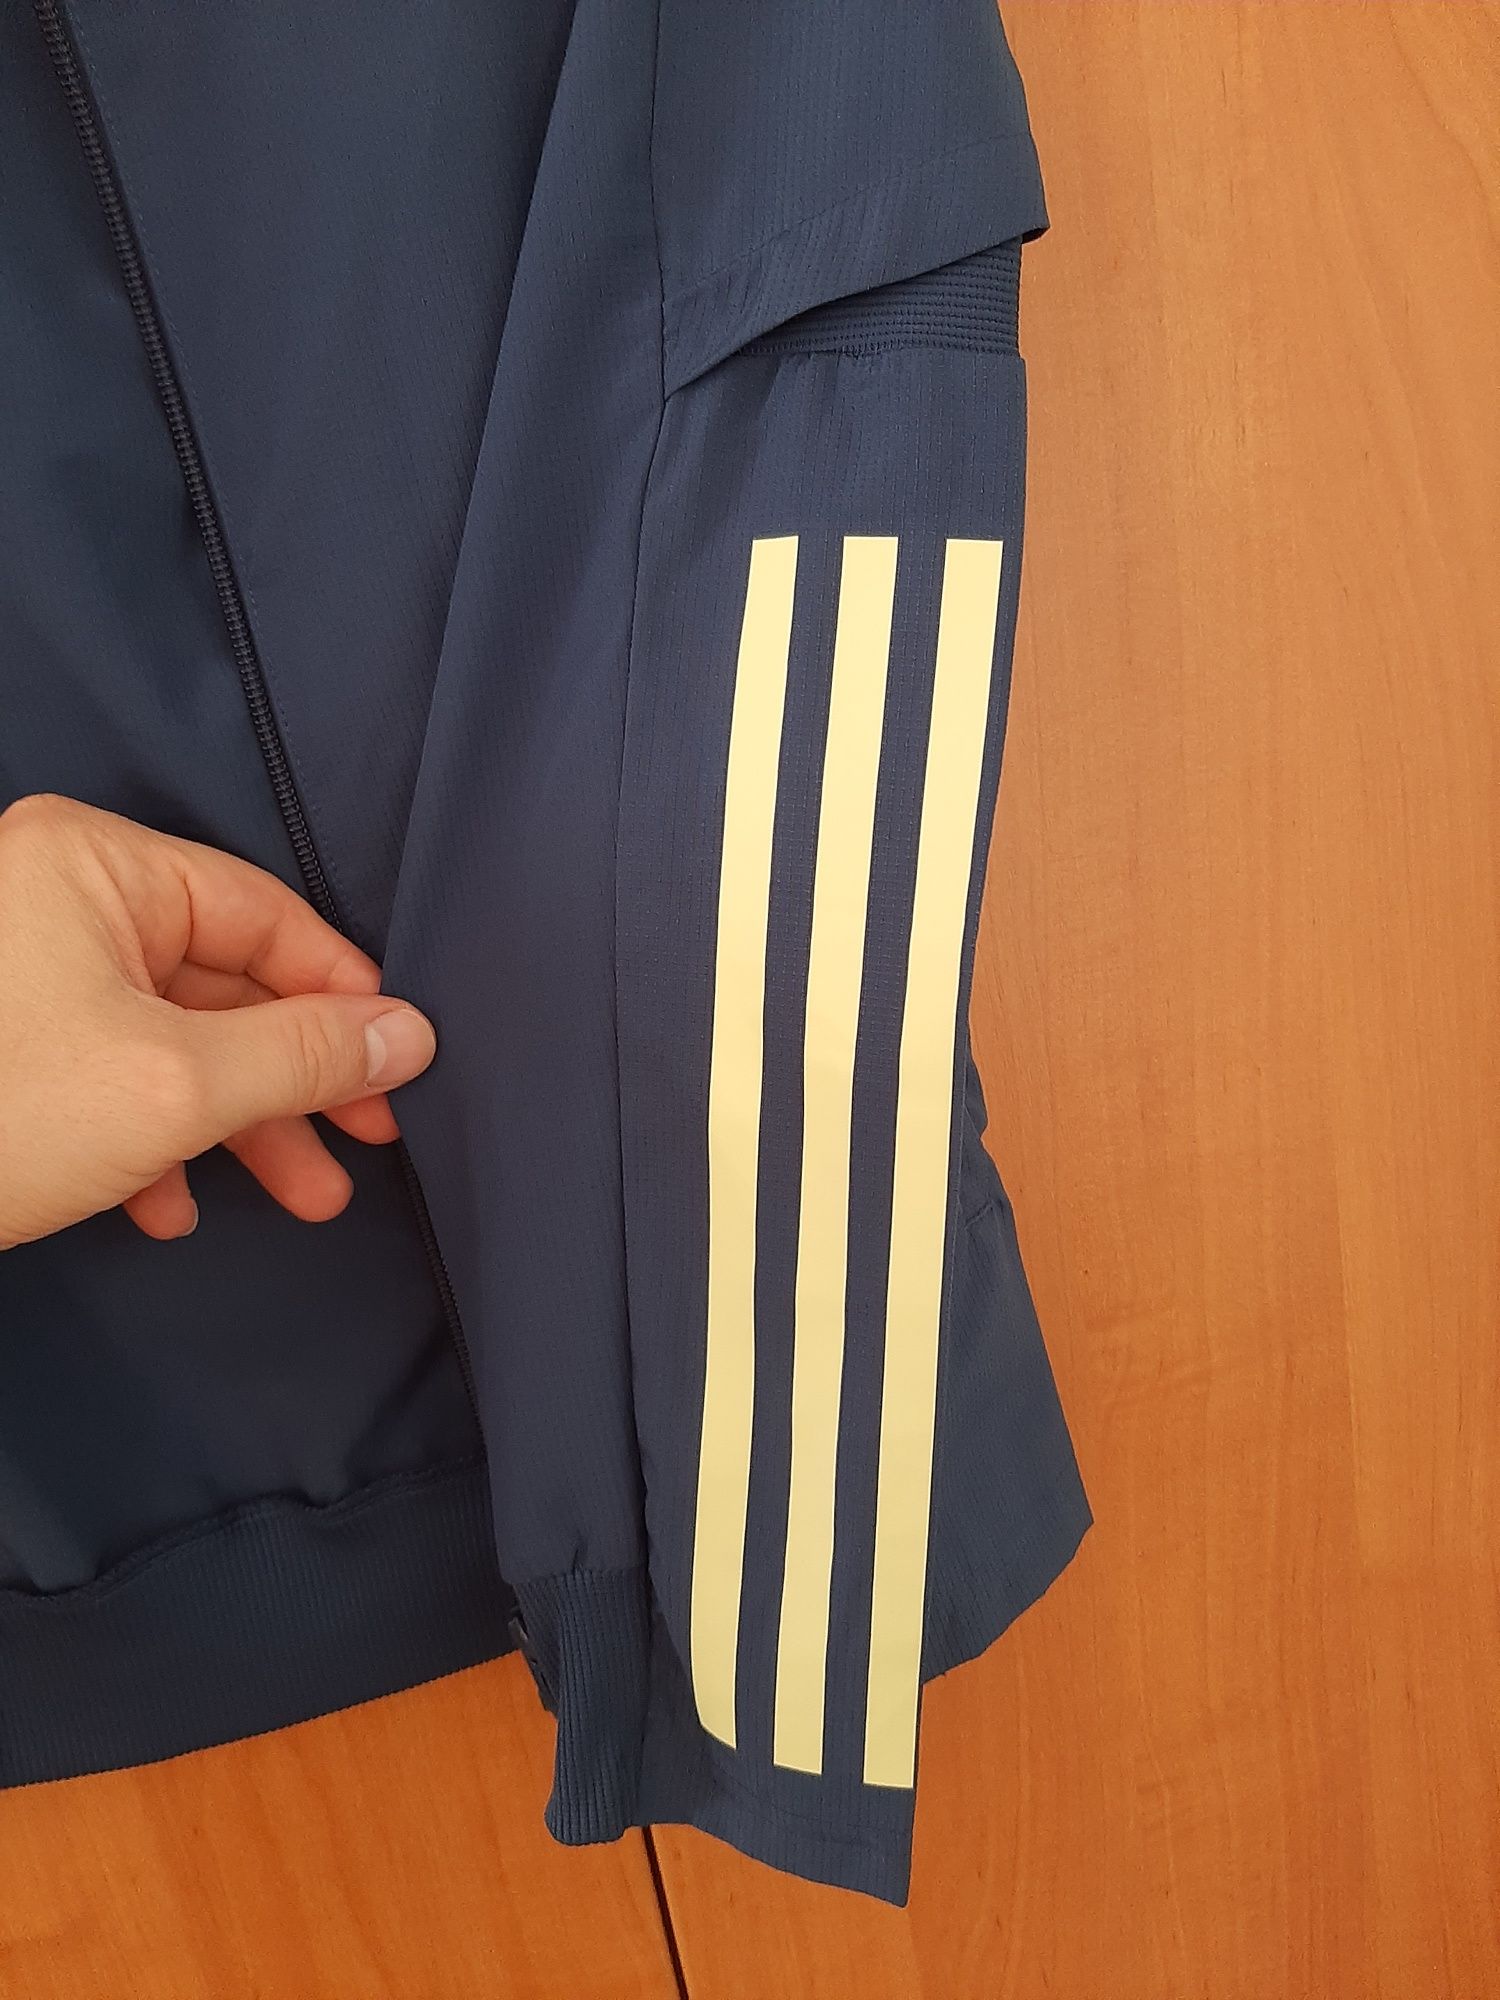 Куртка Adidas Arsenal Aeroready оригинальная